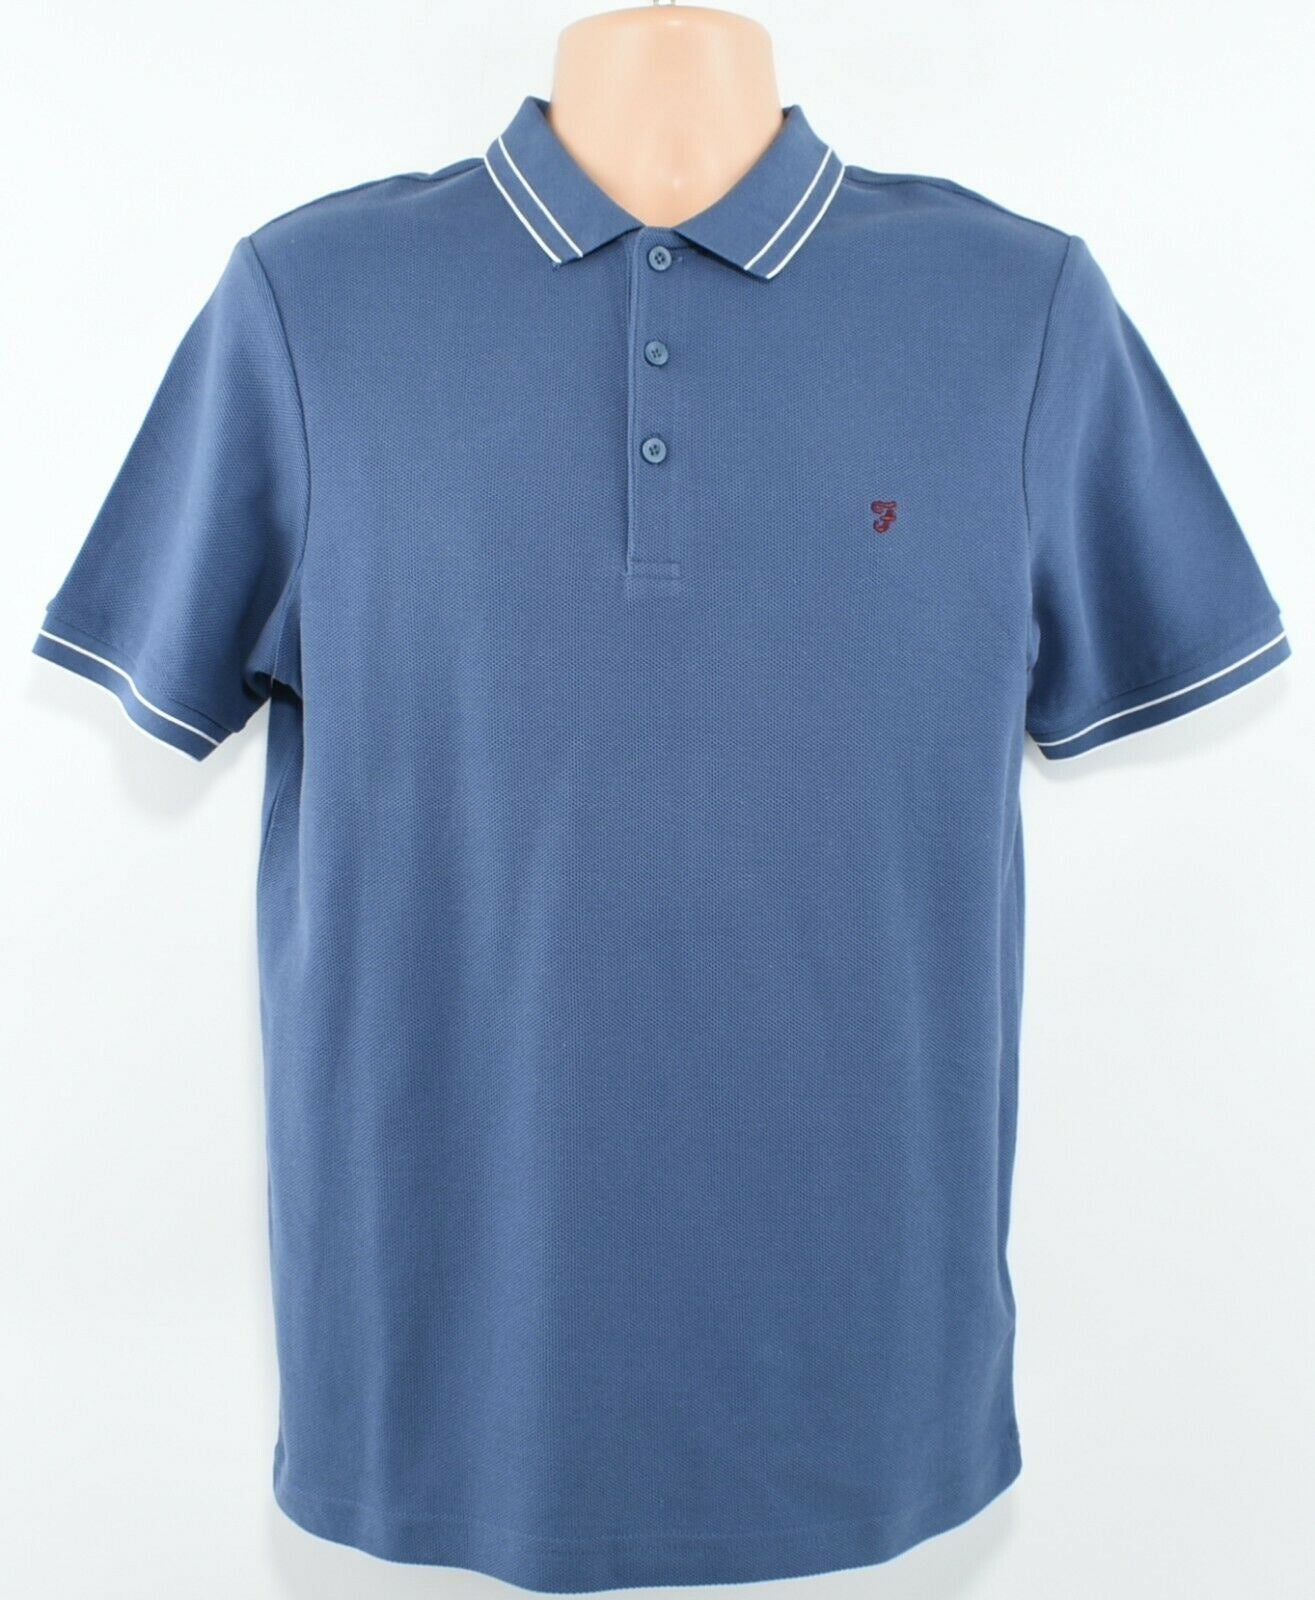 FARAH Men's Mersey Honeycomb Polo Shirt, Bobby Blue, size S